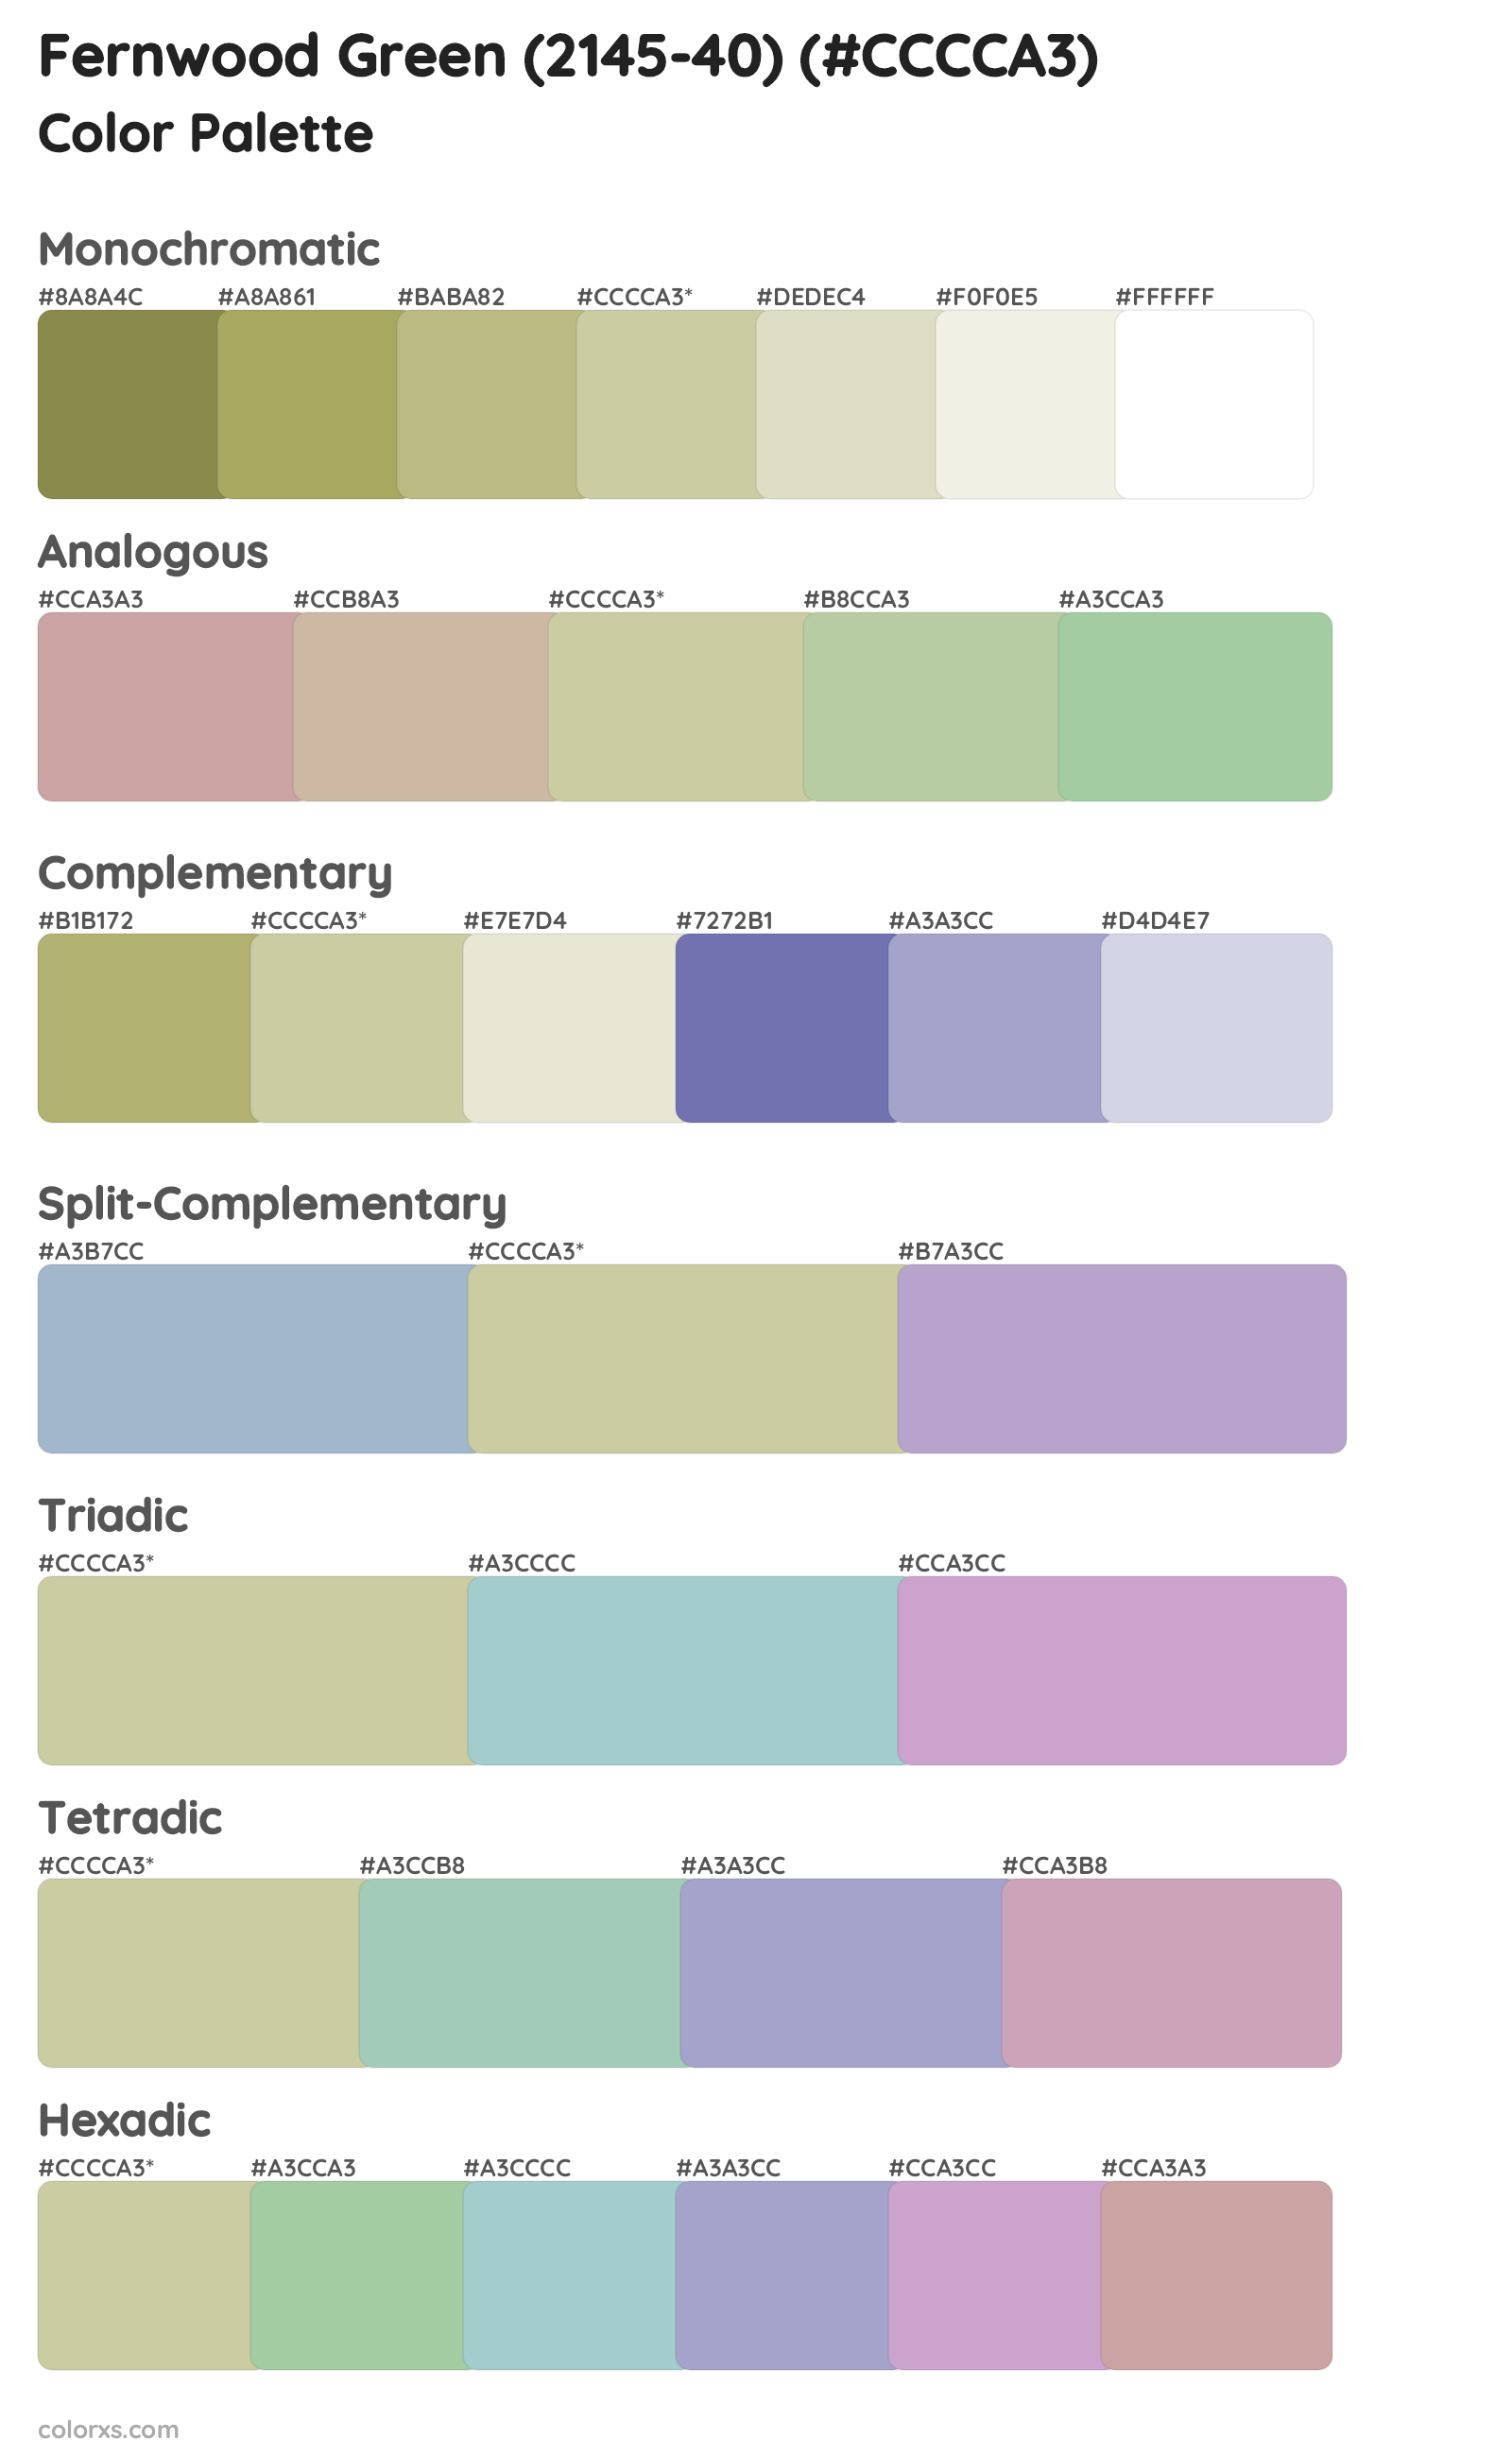 Fernwood Green (2145-40) Color Scheme Palettes